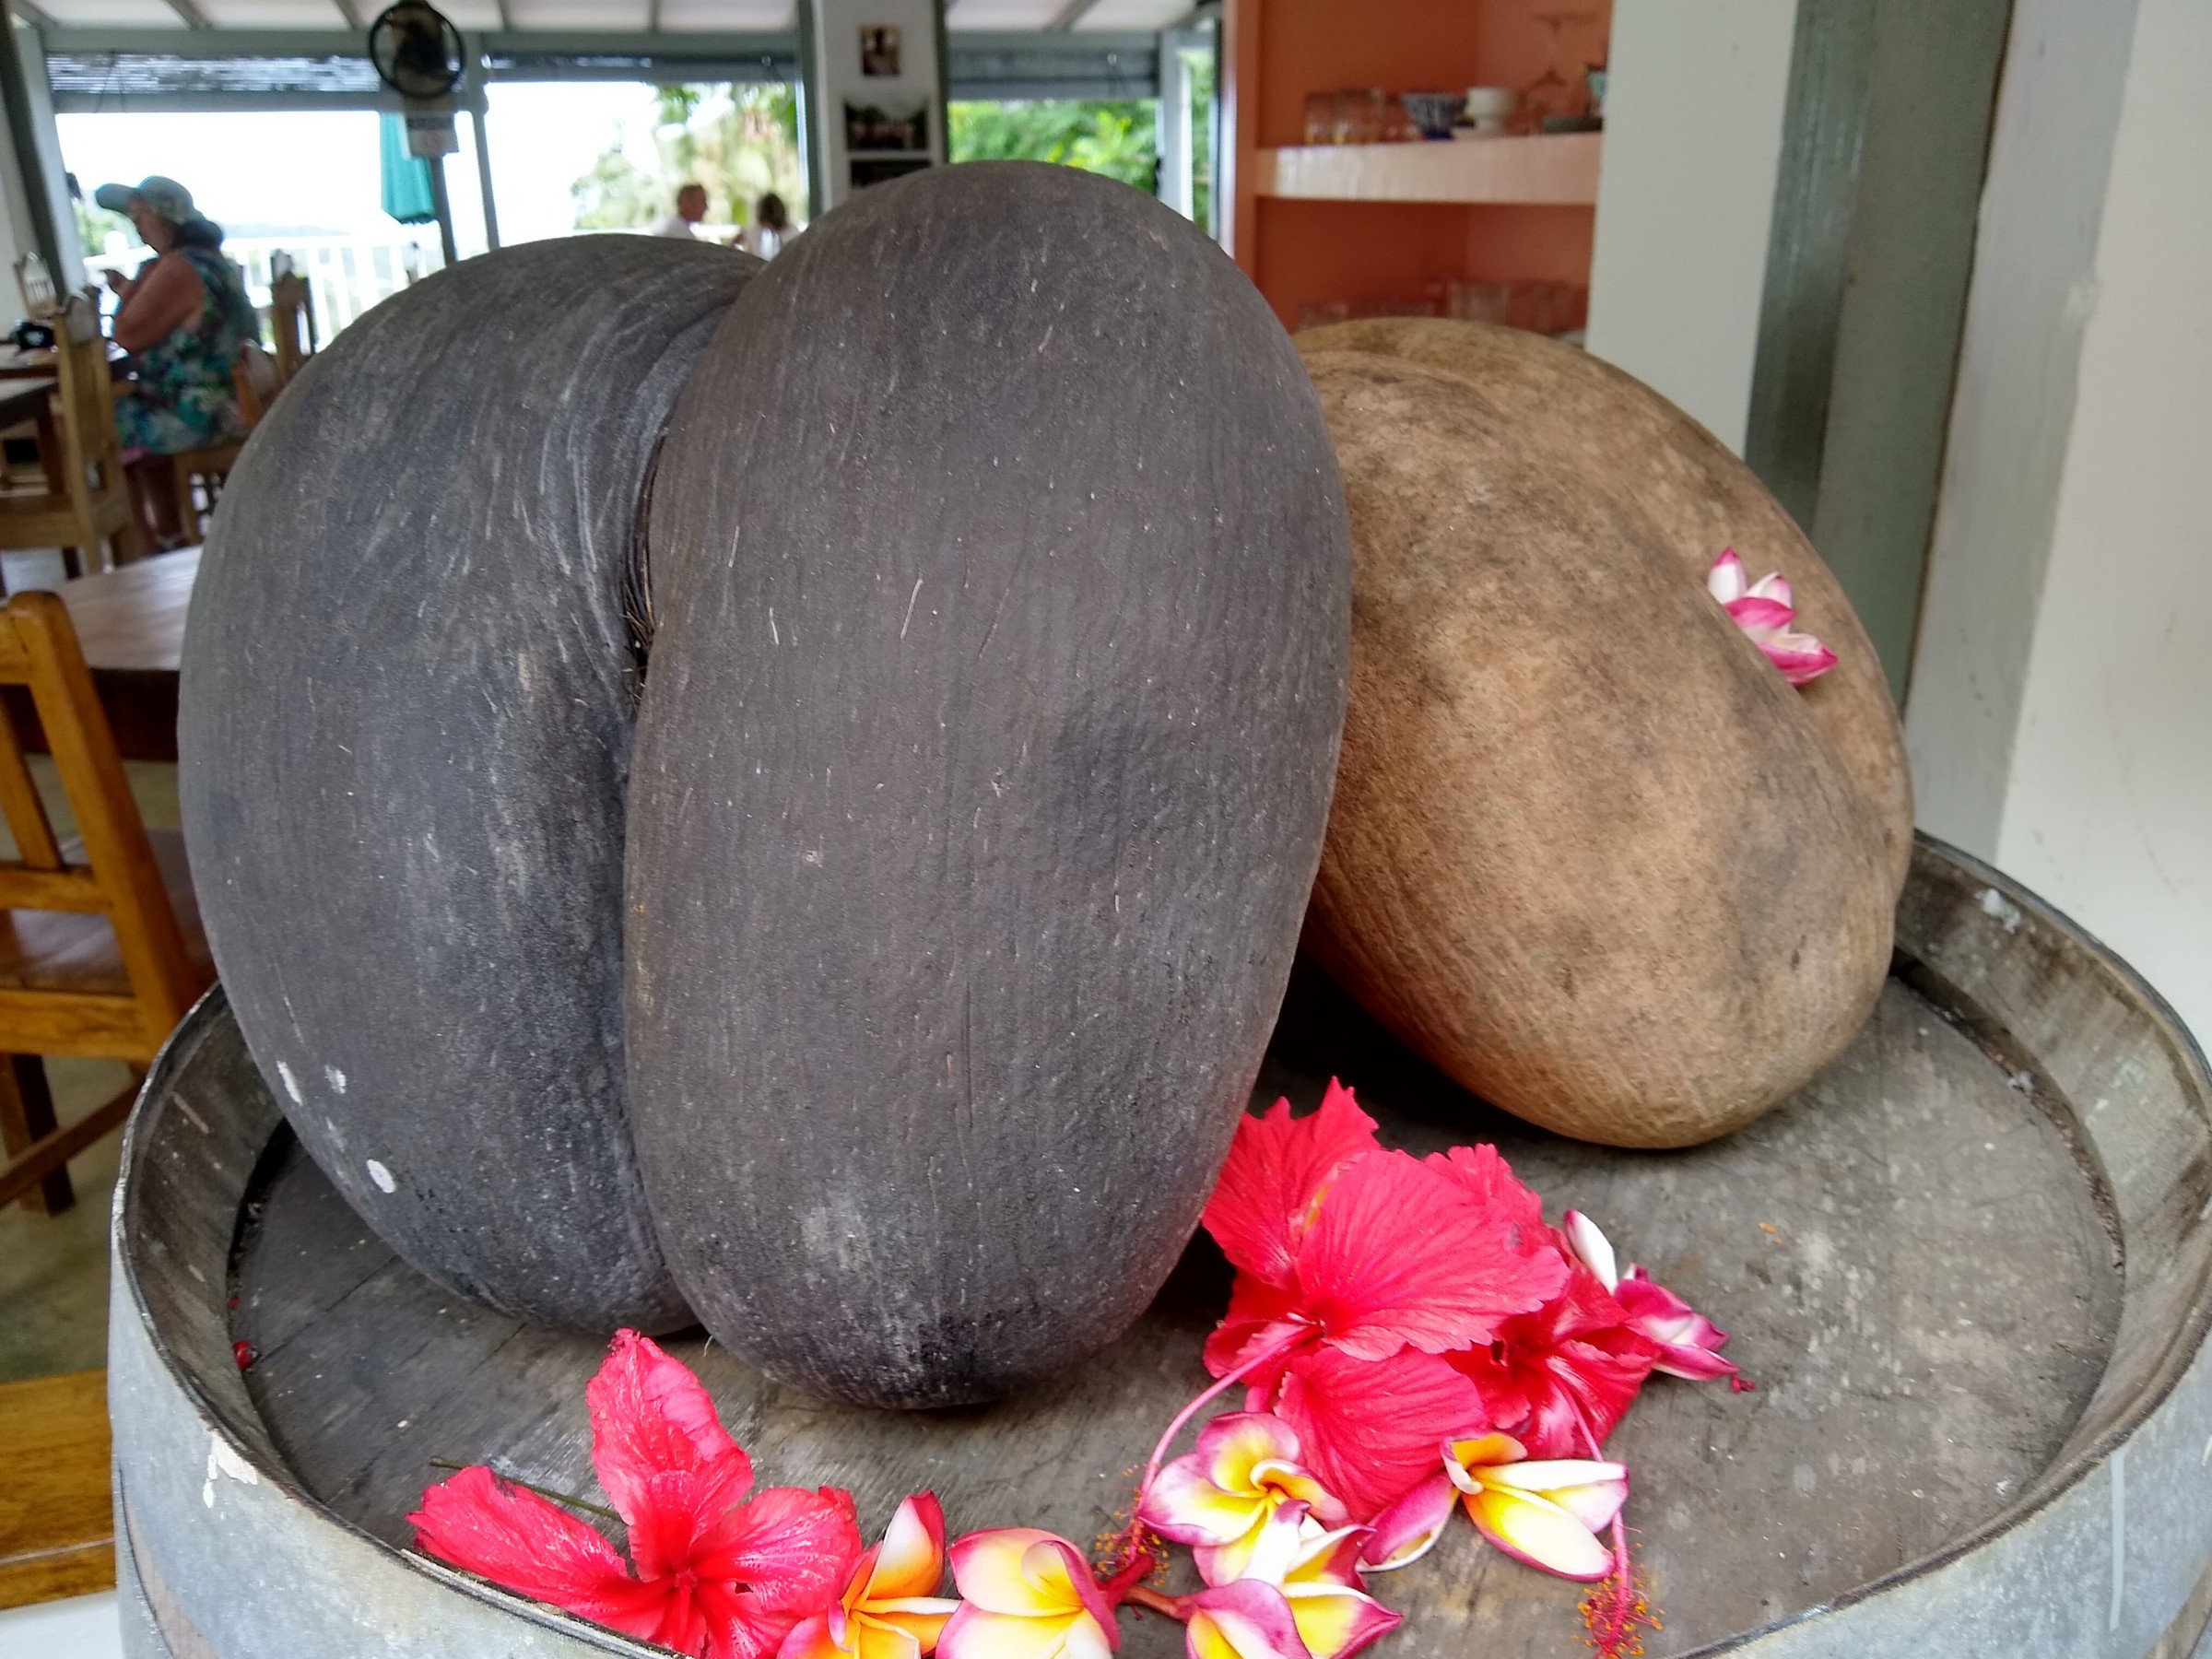 The famous coco de mer...yes, it's a coconut! | Photo